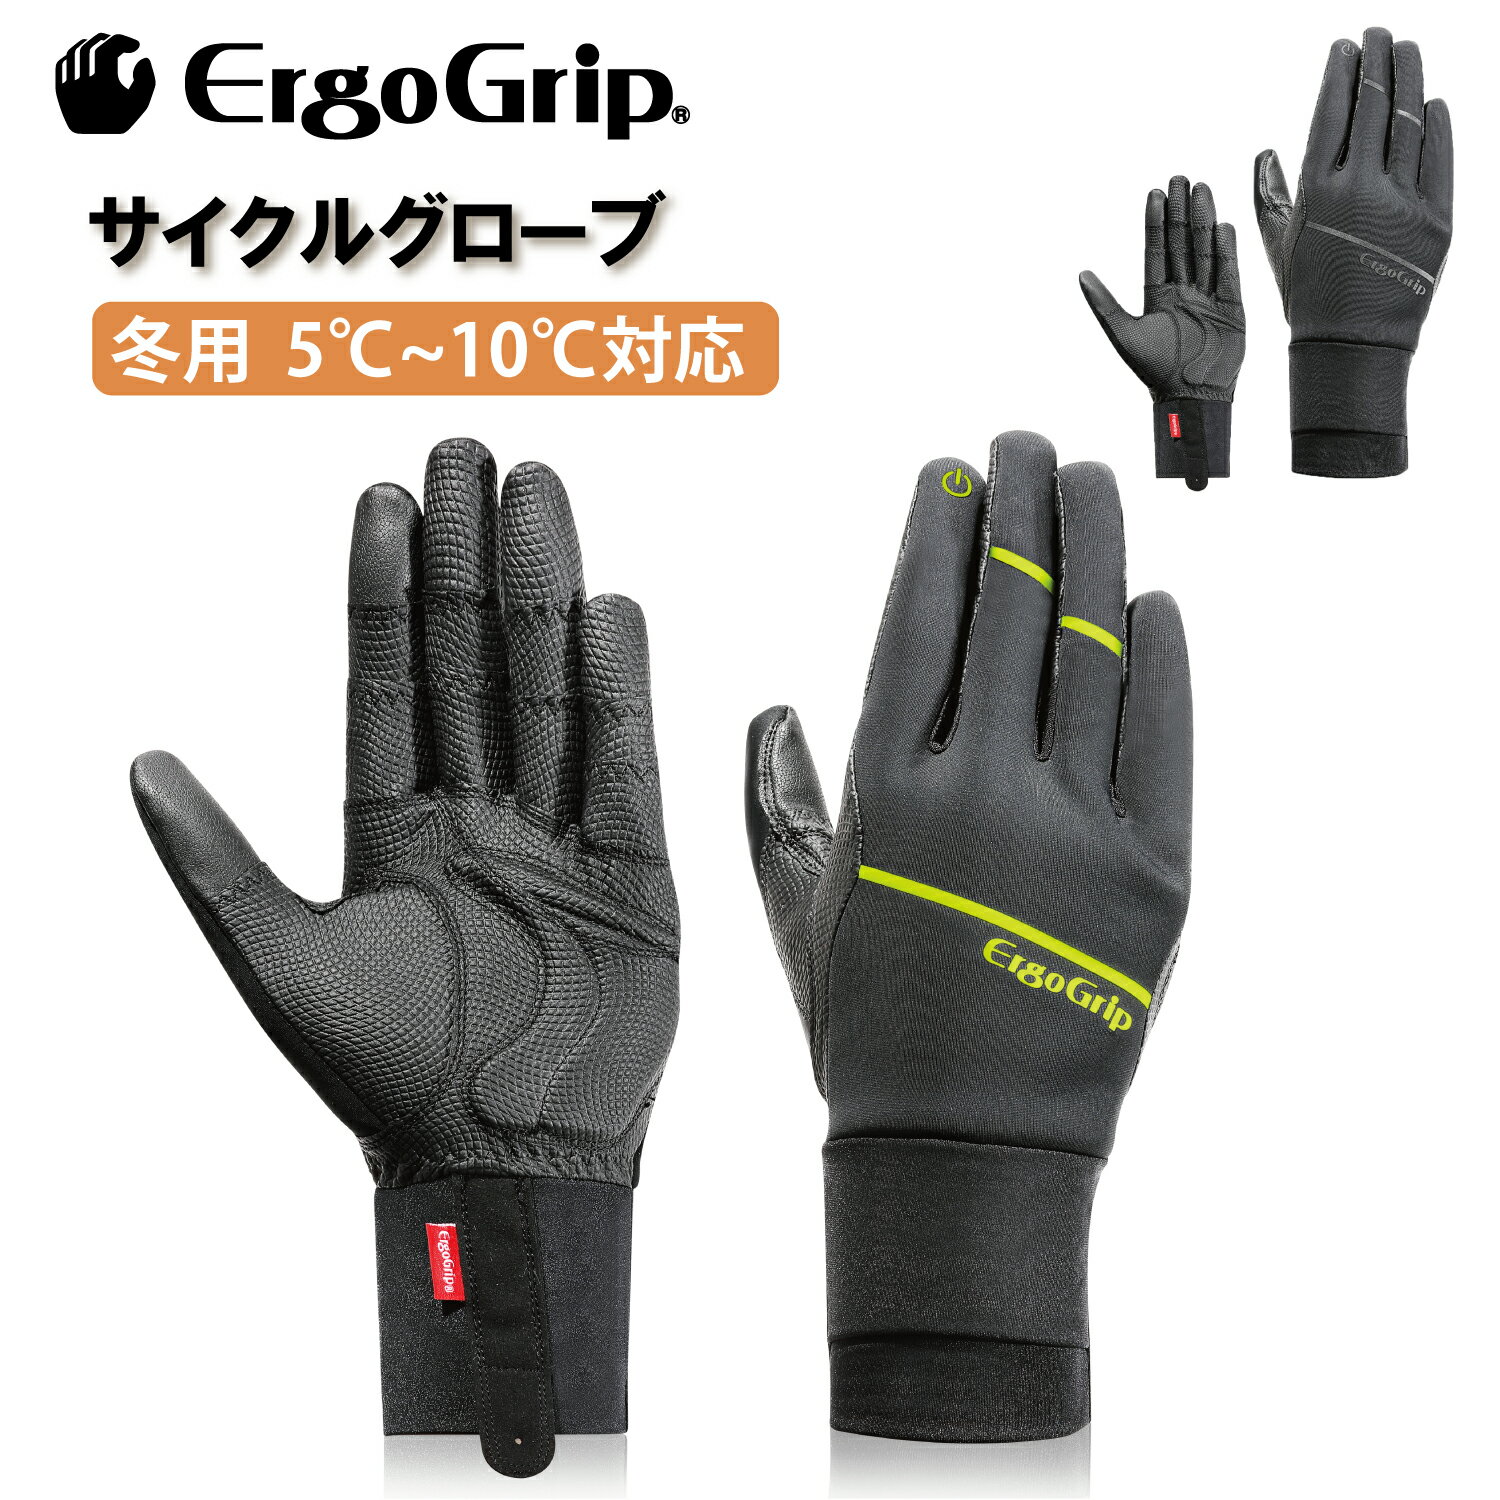 ErgoGrip エルゴグリップ 自転車 グローブ 冬用 薄手 5℃～10℃ ウインターグローブ ブラック/イエロー ブラック/ブラック